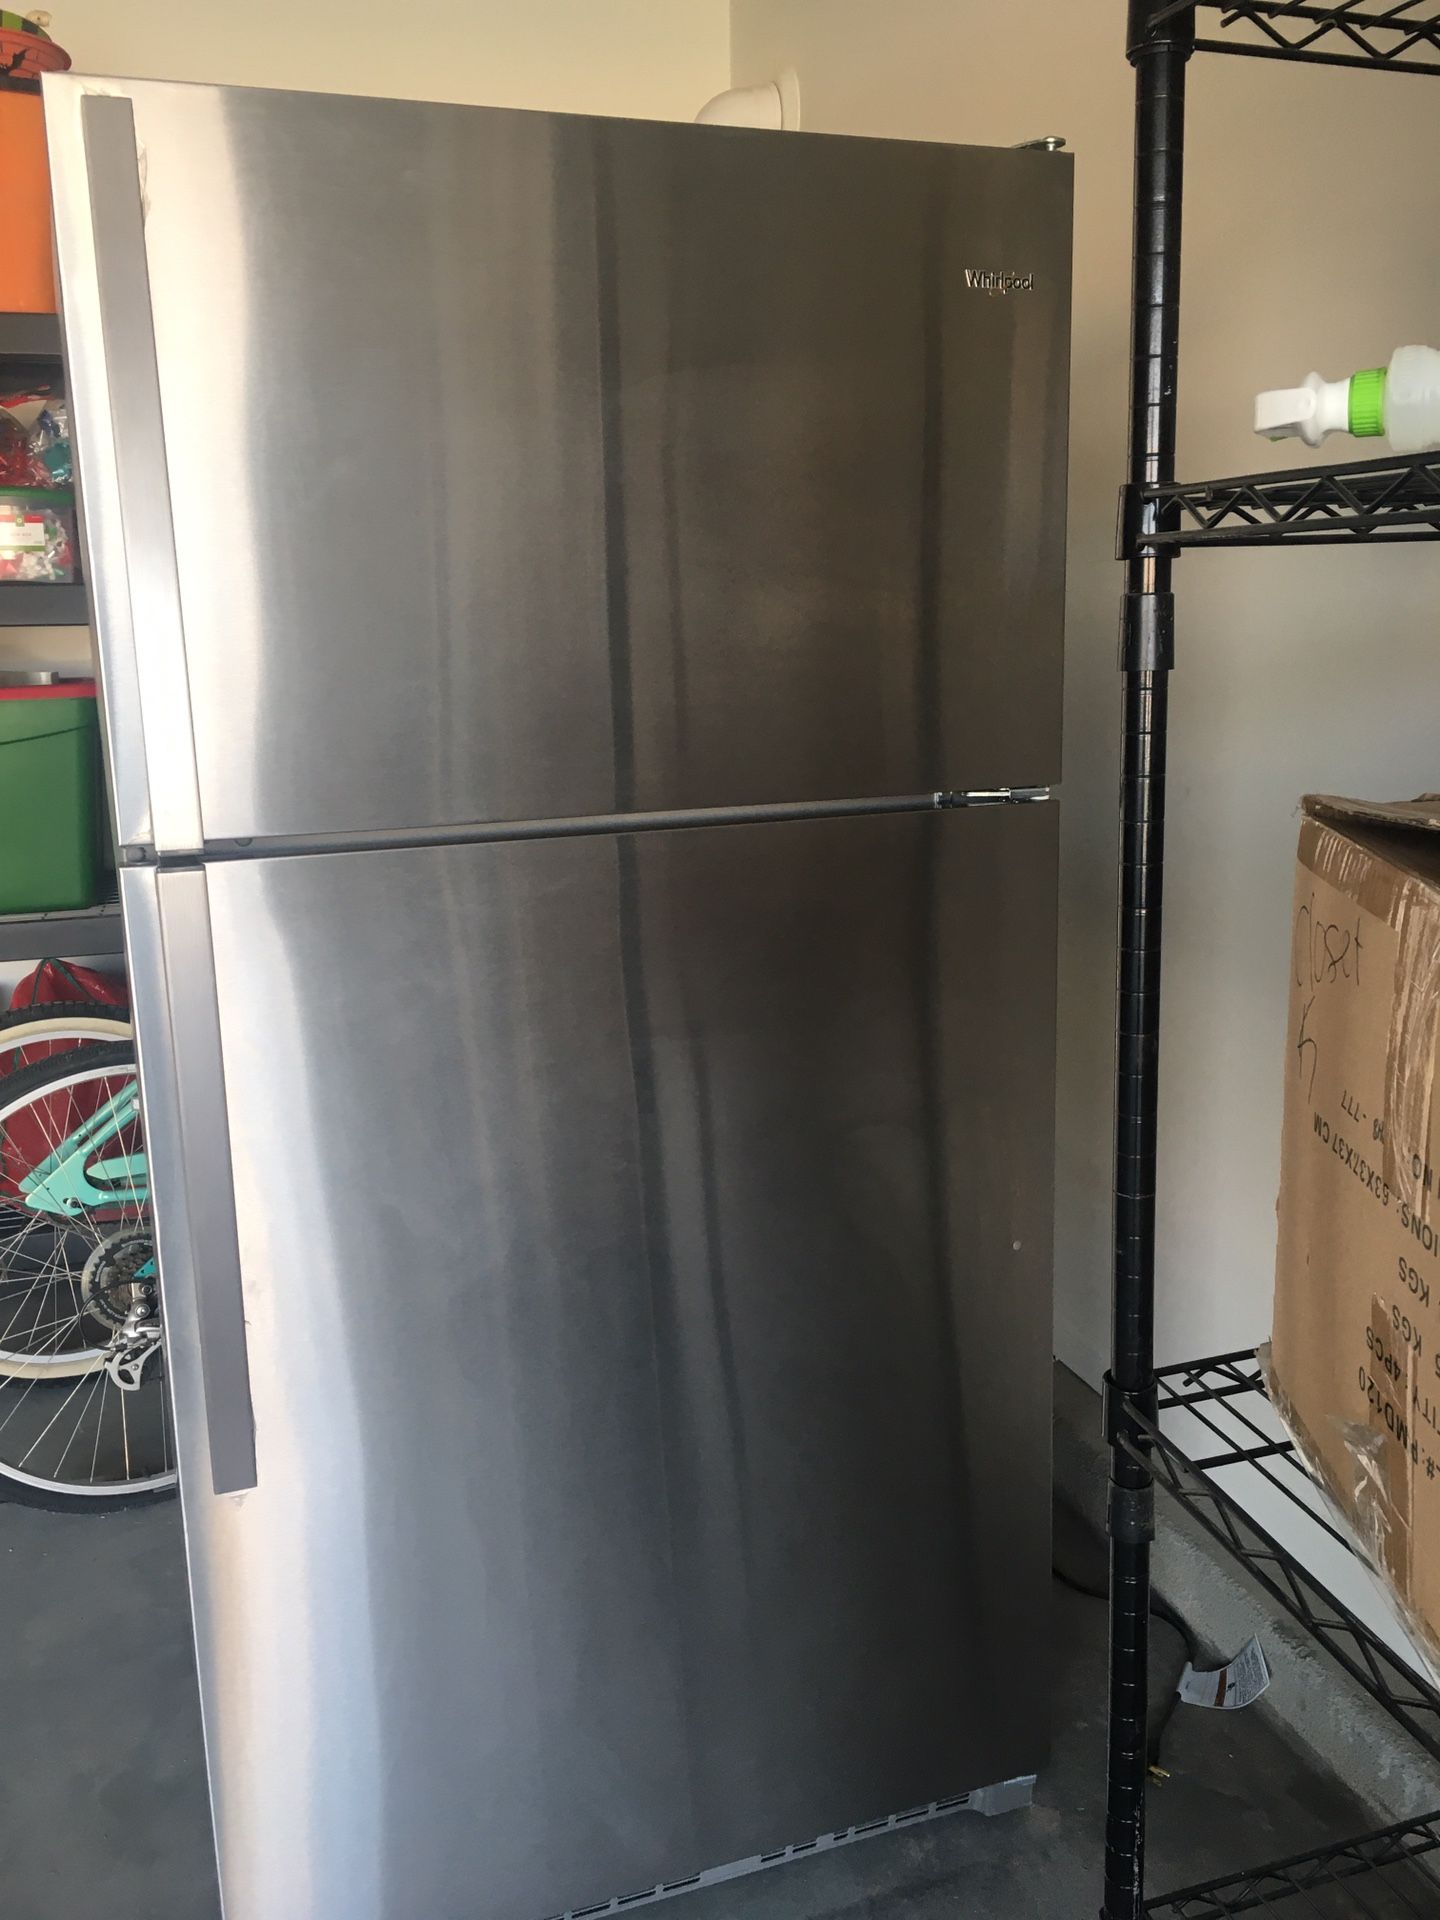 Brand New Whirlpool Stainless Steel 20.5 cu ft top Freezer Refrigerator Model #WRT311FZDM with Ice maker